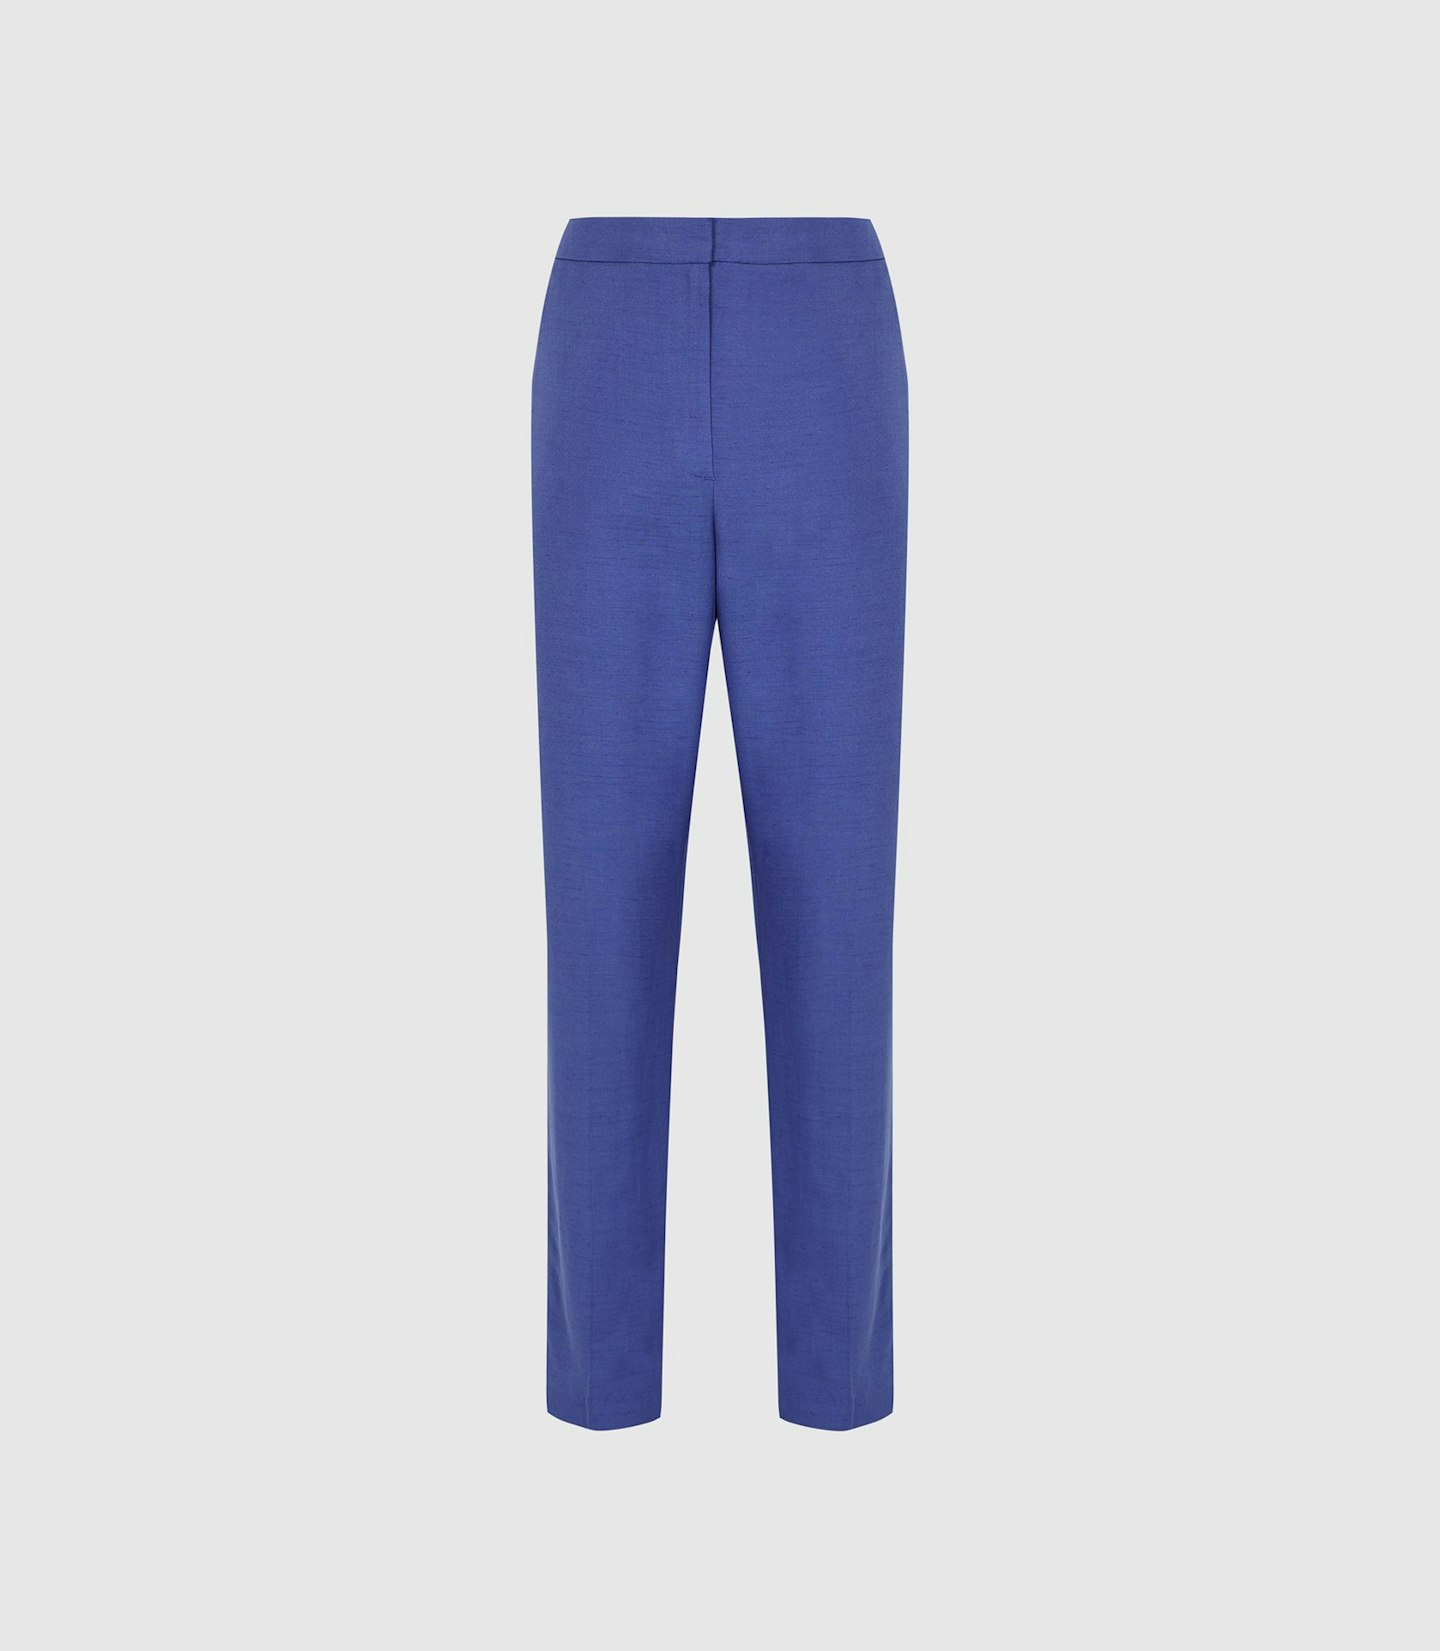 Reiss, Haya Trouser Slim Fit Tailored Trousers Cobalt, £150